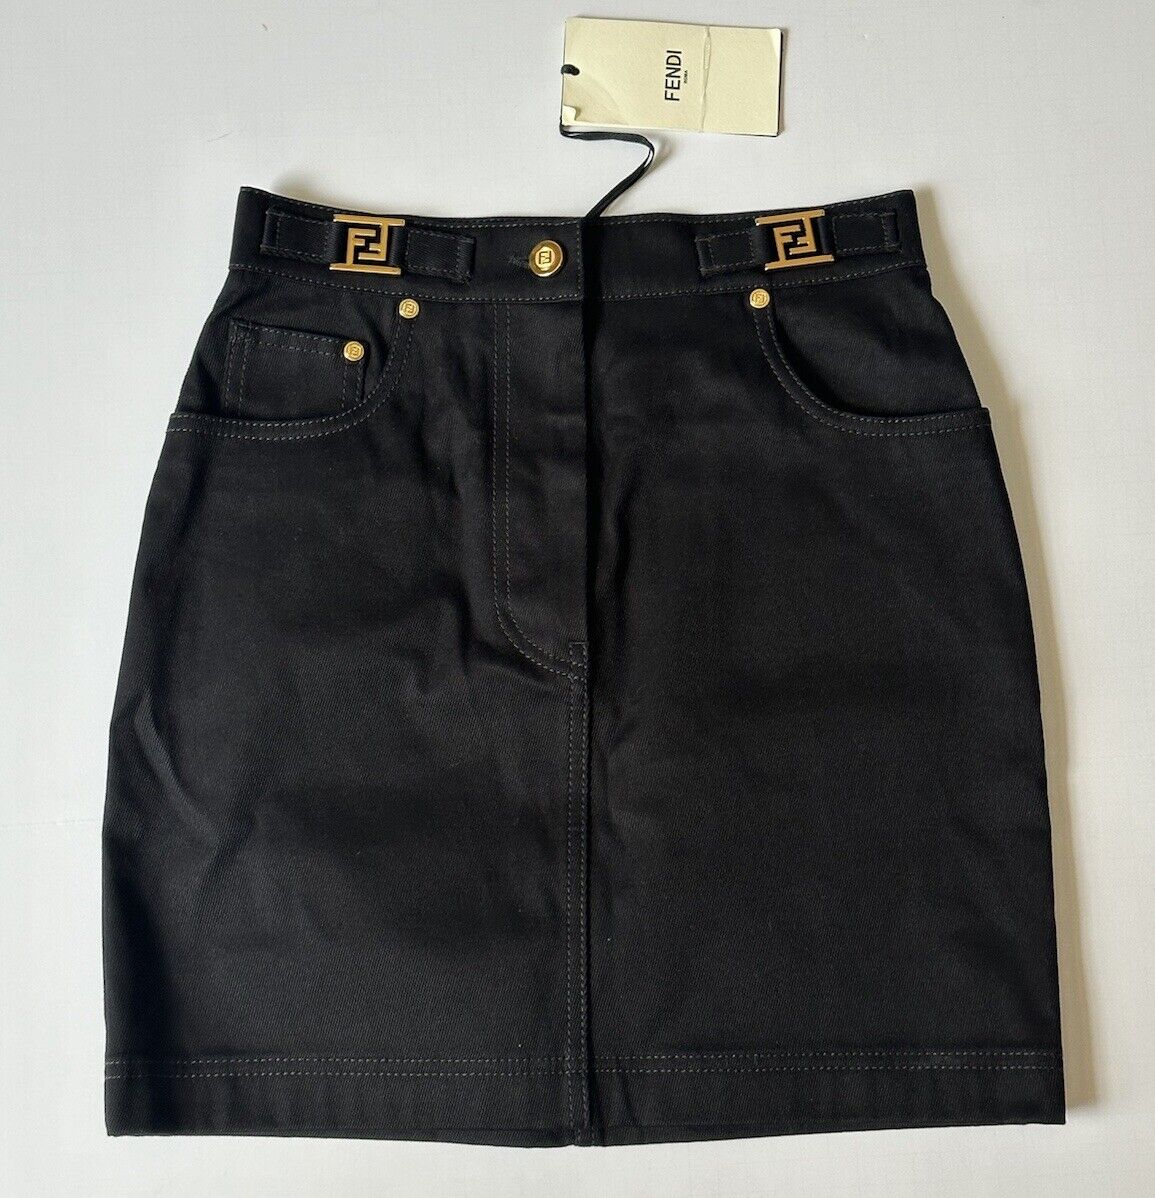 Fendi Woven Denim Black Skirt 2 US (38 Euro) Italy FLQ548 NWT $790